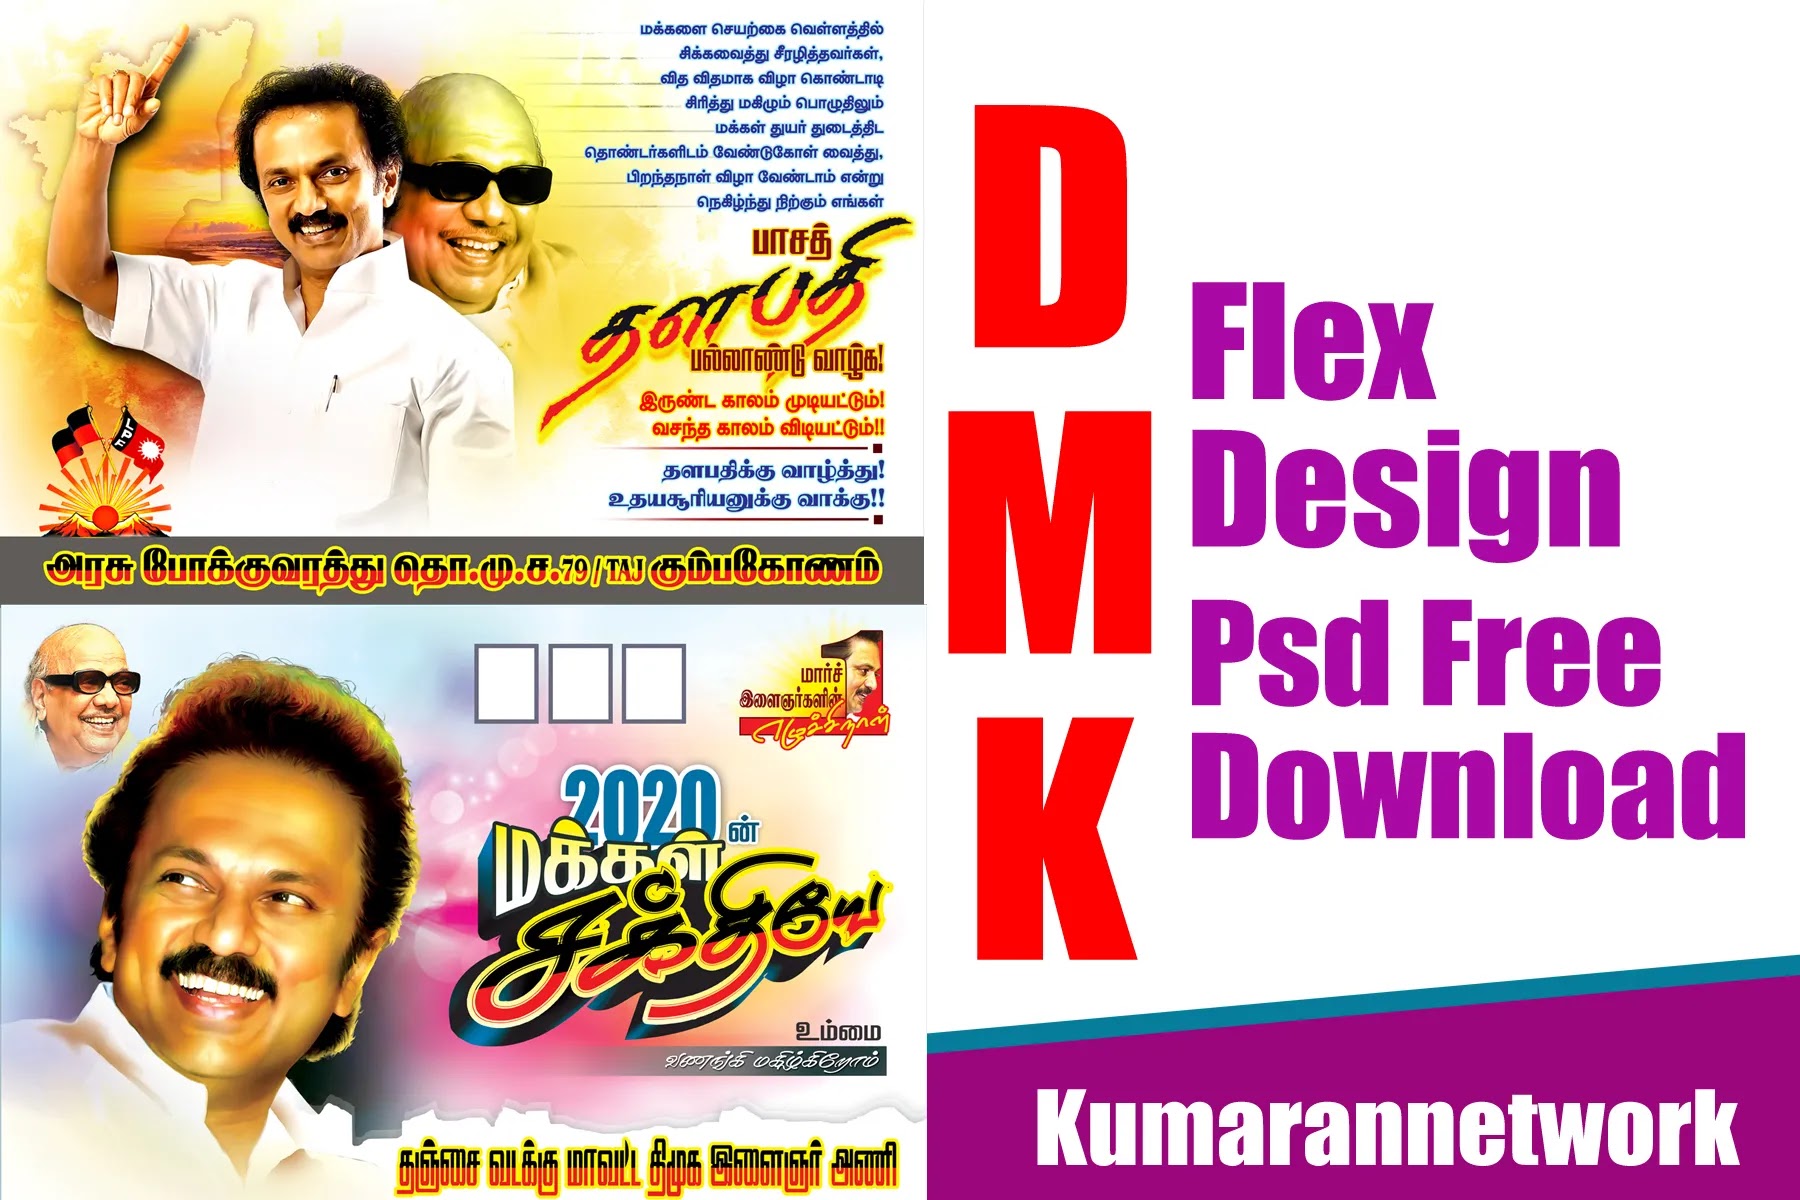 Dmk Flex Design Psd File Free Download - Kumaran Network